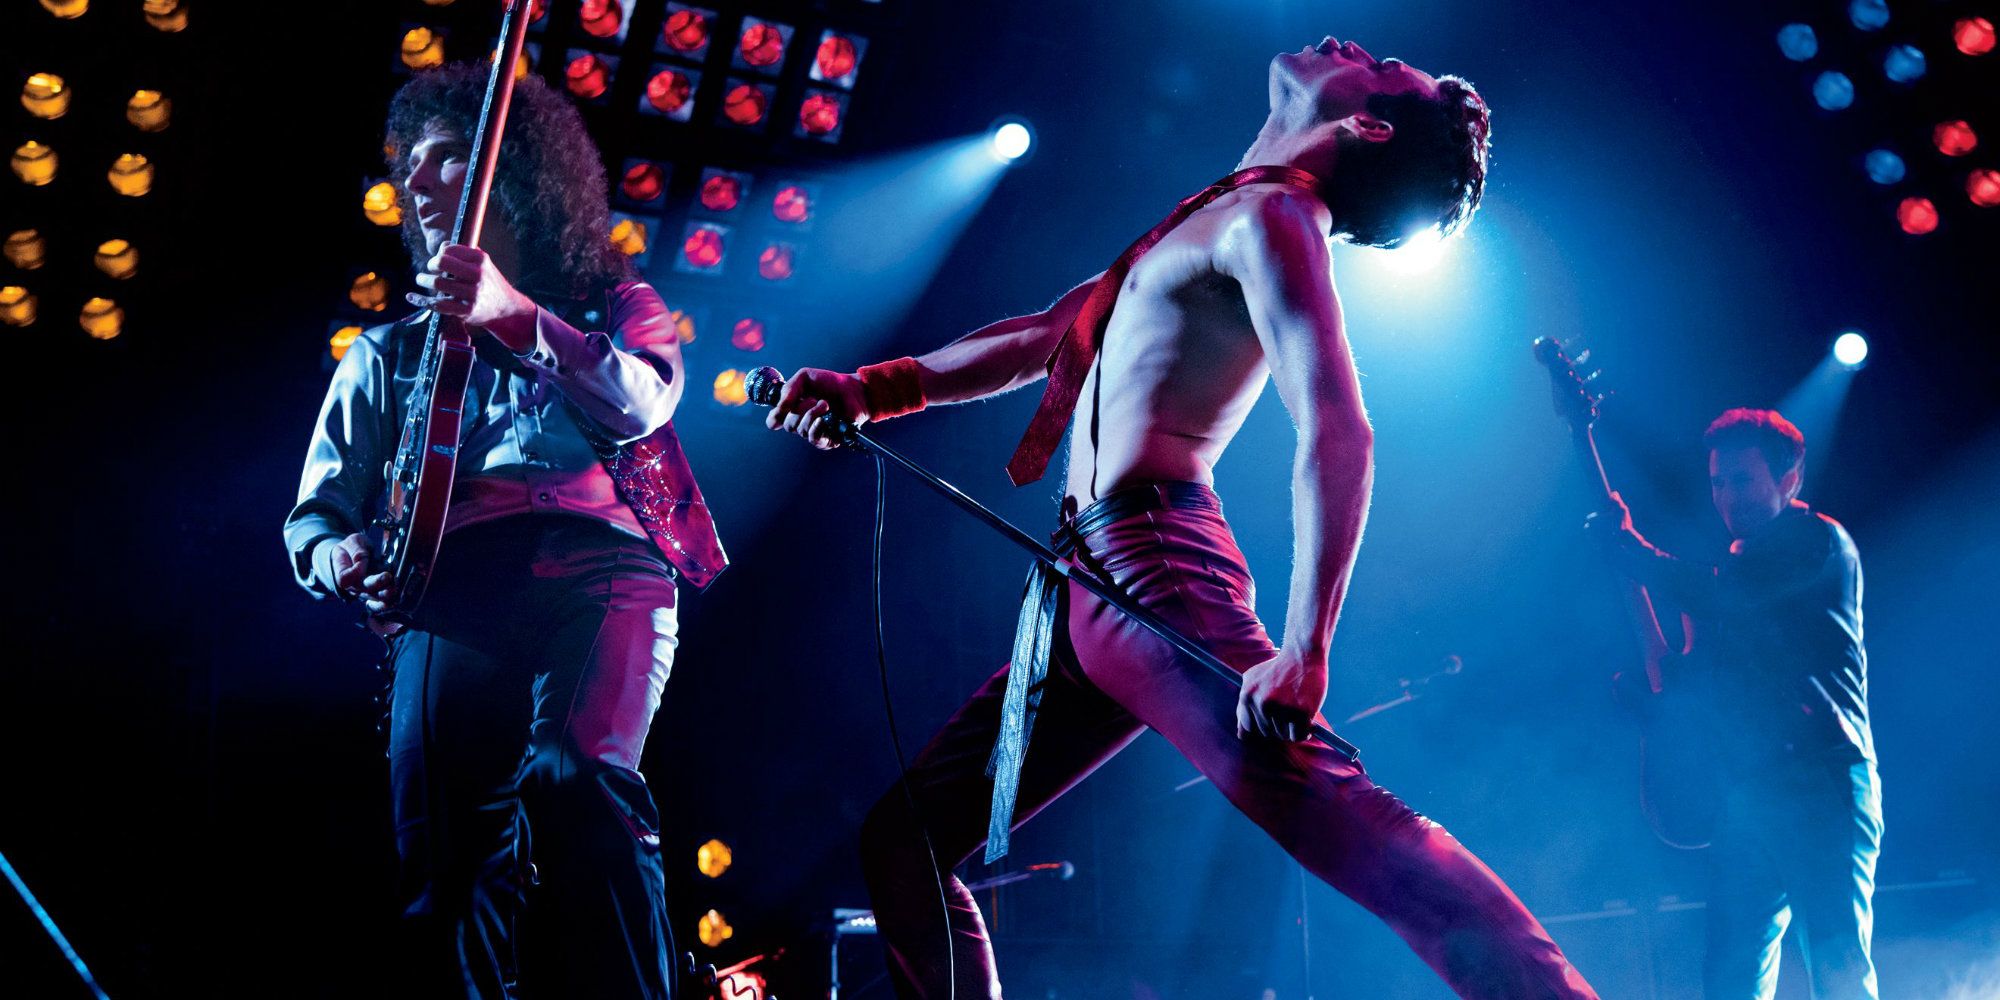 Tráiler oficial de Bohemian Rhapsody: Rami Malek quiere liberarse